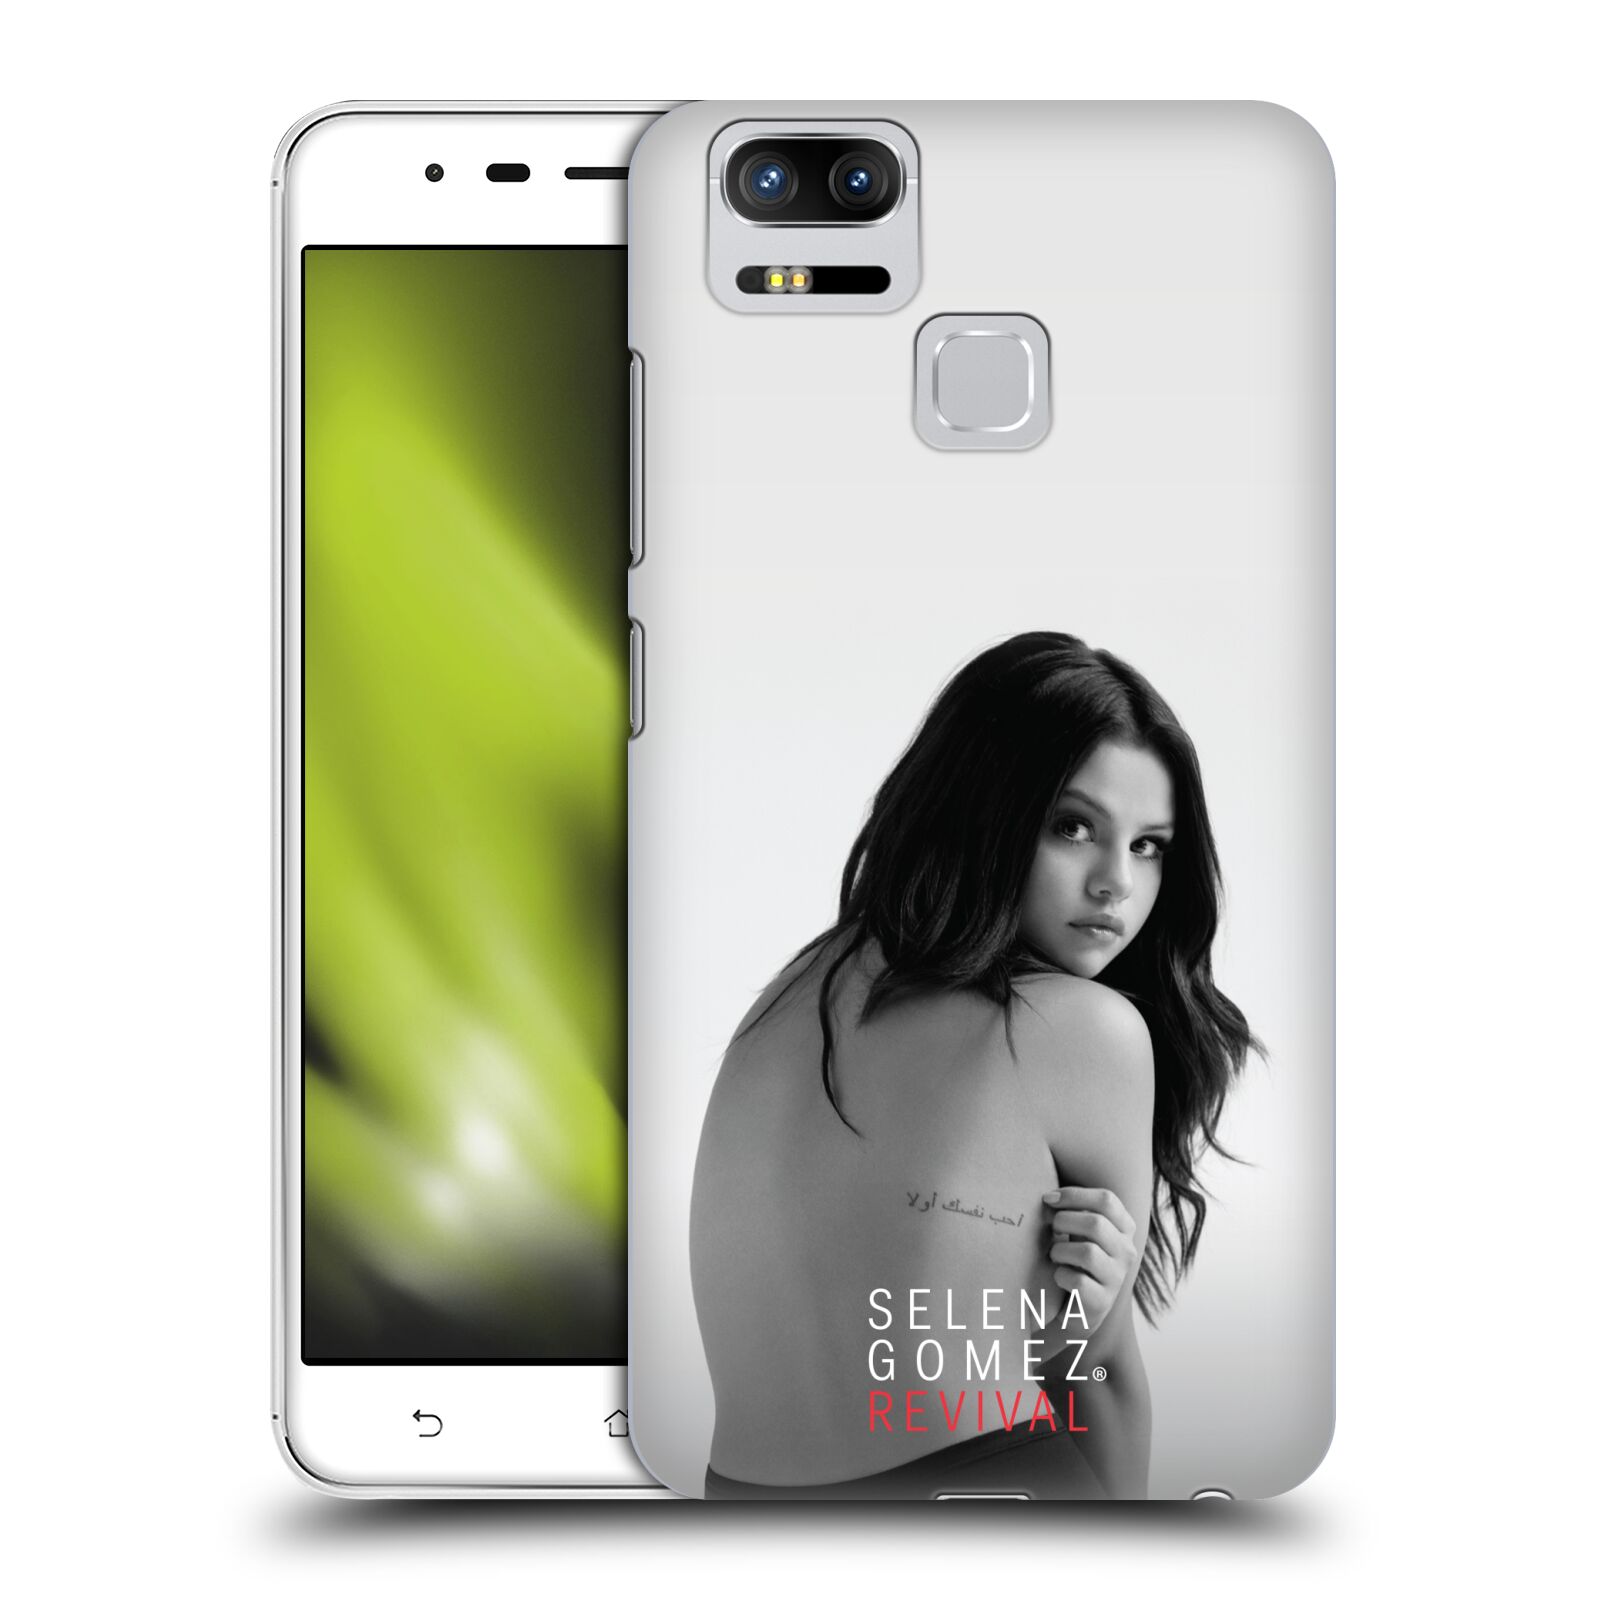 HEAD CASE plastový obal na mobil Asus Zenfone 3 Zoom ZE553KL Zpěvačka Selena Gomez foto Revival zadní strana